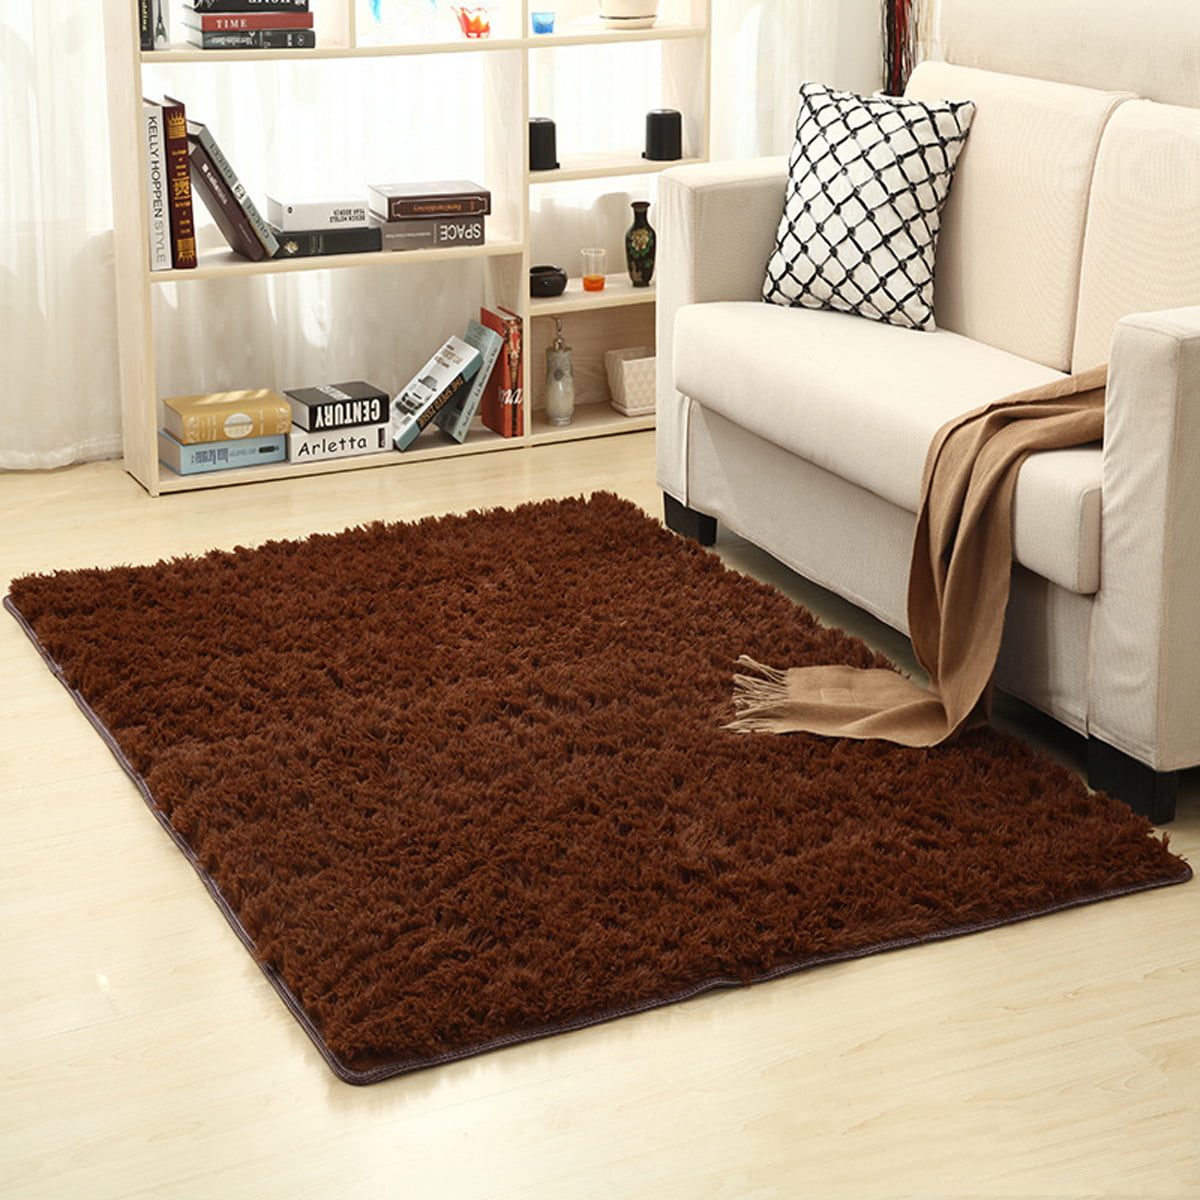 Cute Sea Animals Indoor Area Rug 6'x4' Living Room Non-Slip Carpets Bedroom Sofa Floor Mat Decoration for Home 